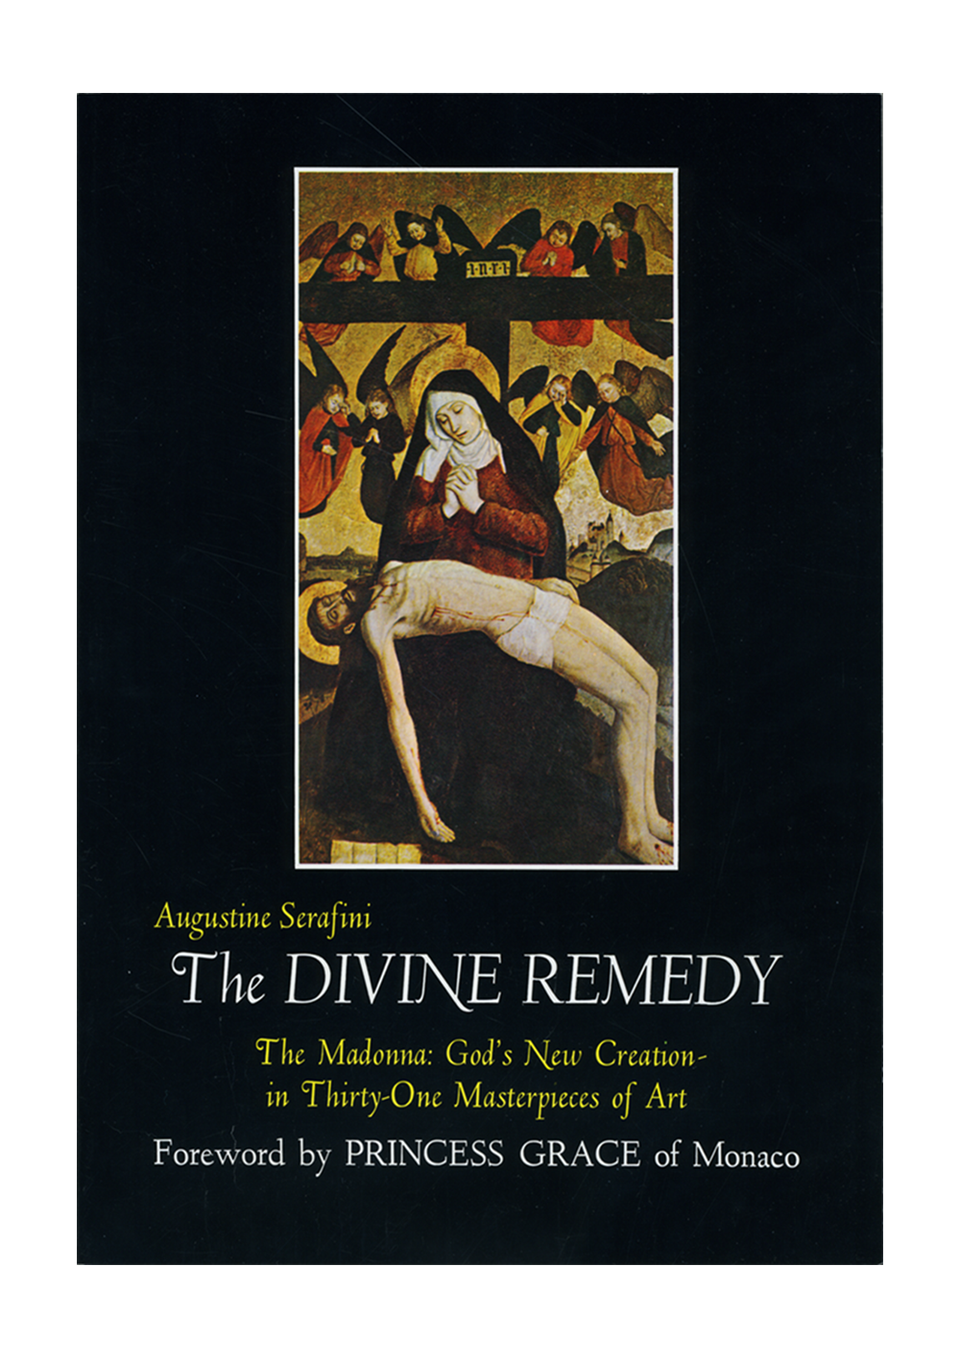 The divine remedy